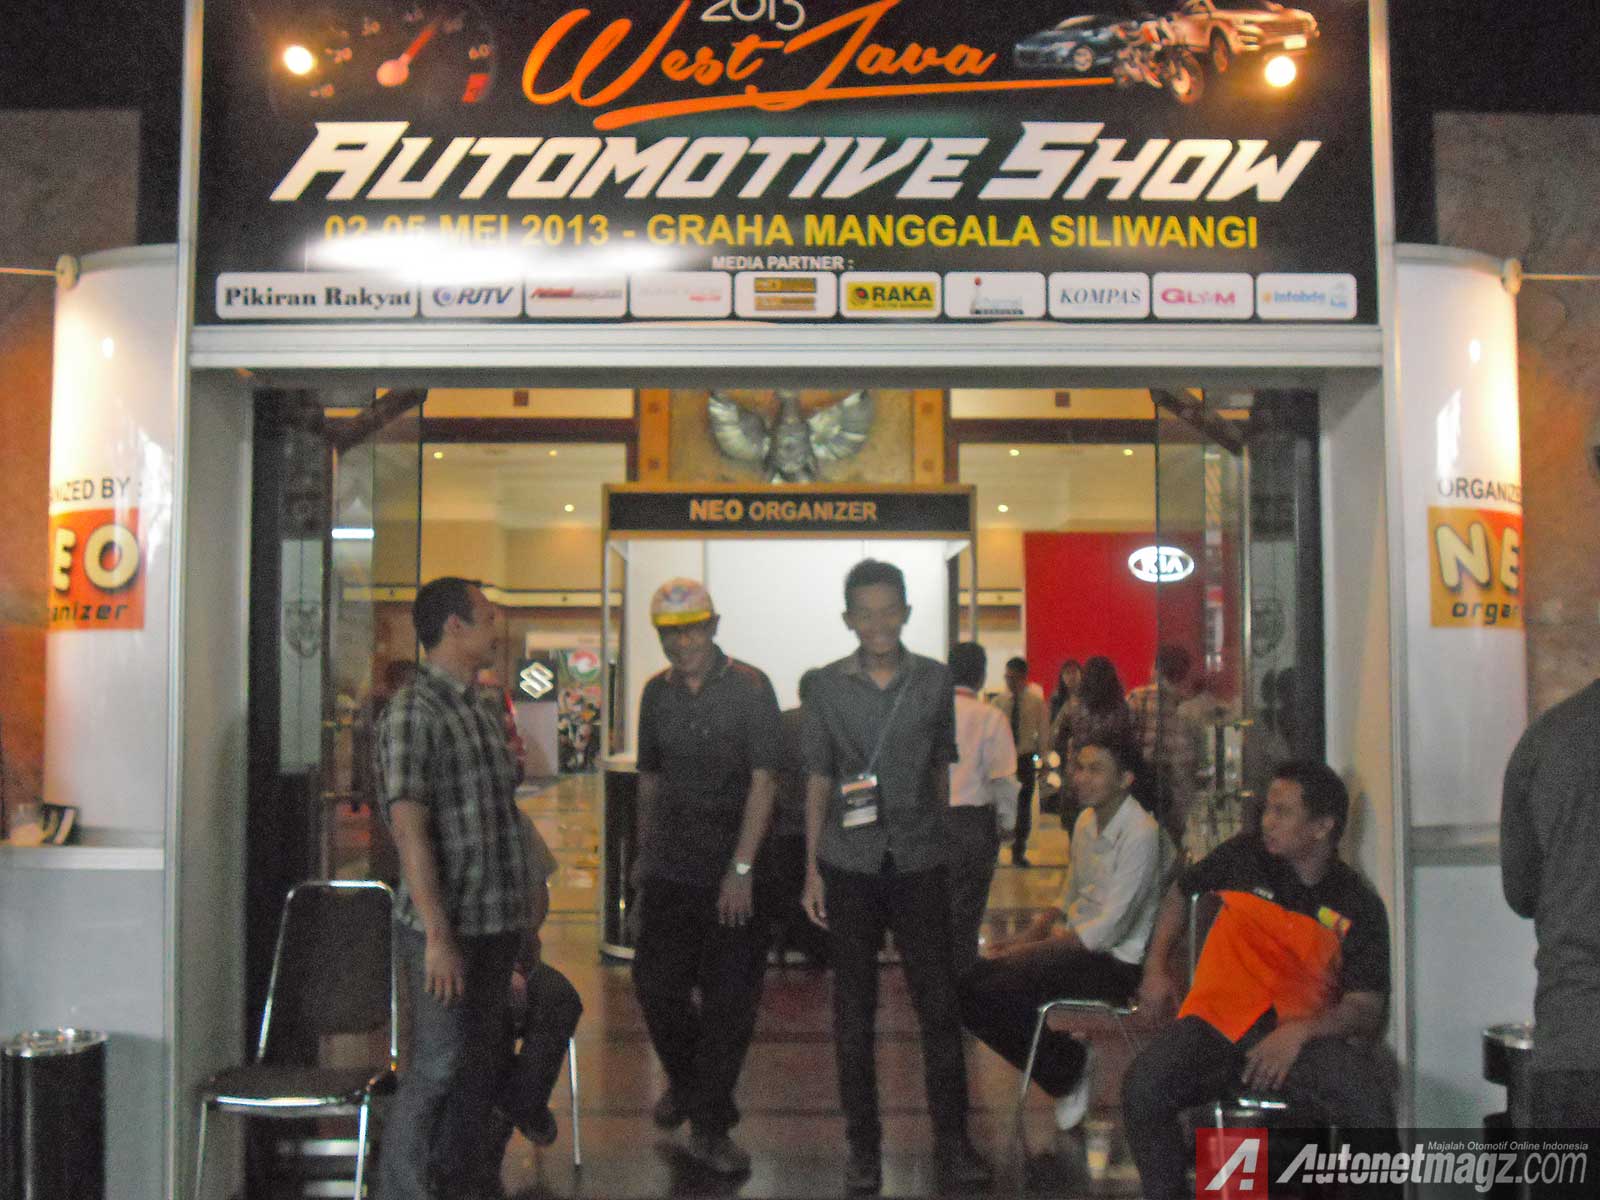 Event, West Java Automotive Show 2013 lalu: West Java Automotive Show 2014 Awal Mei Digelar!